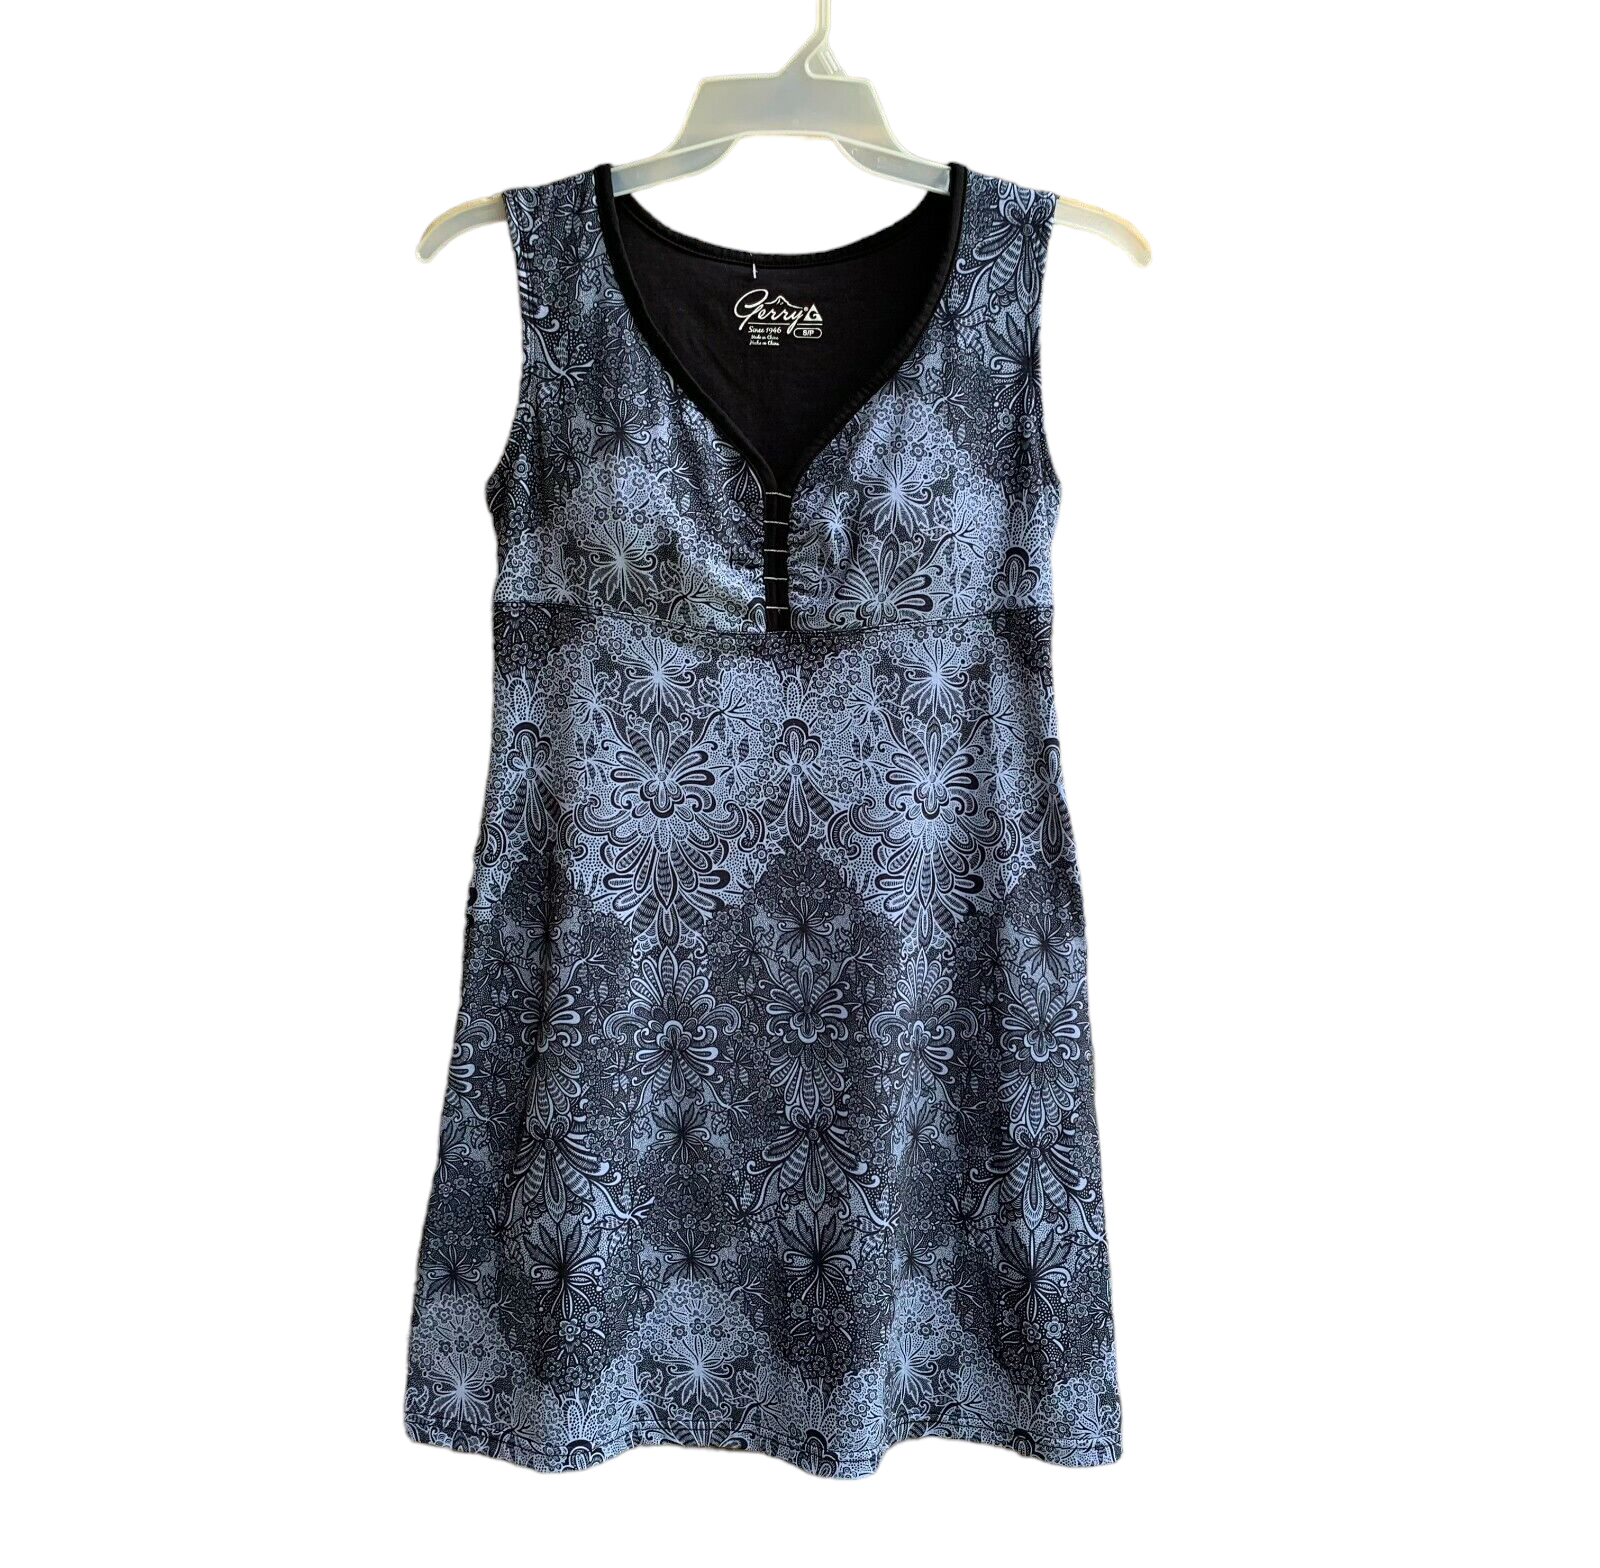 Gerry Dress Sleeveless Summer Dress Gray Black Size S | eBay